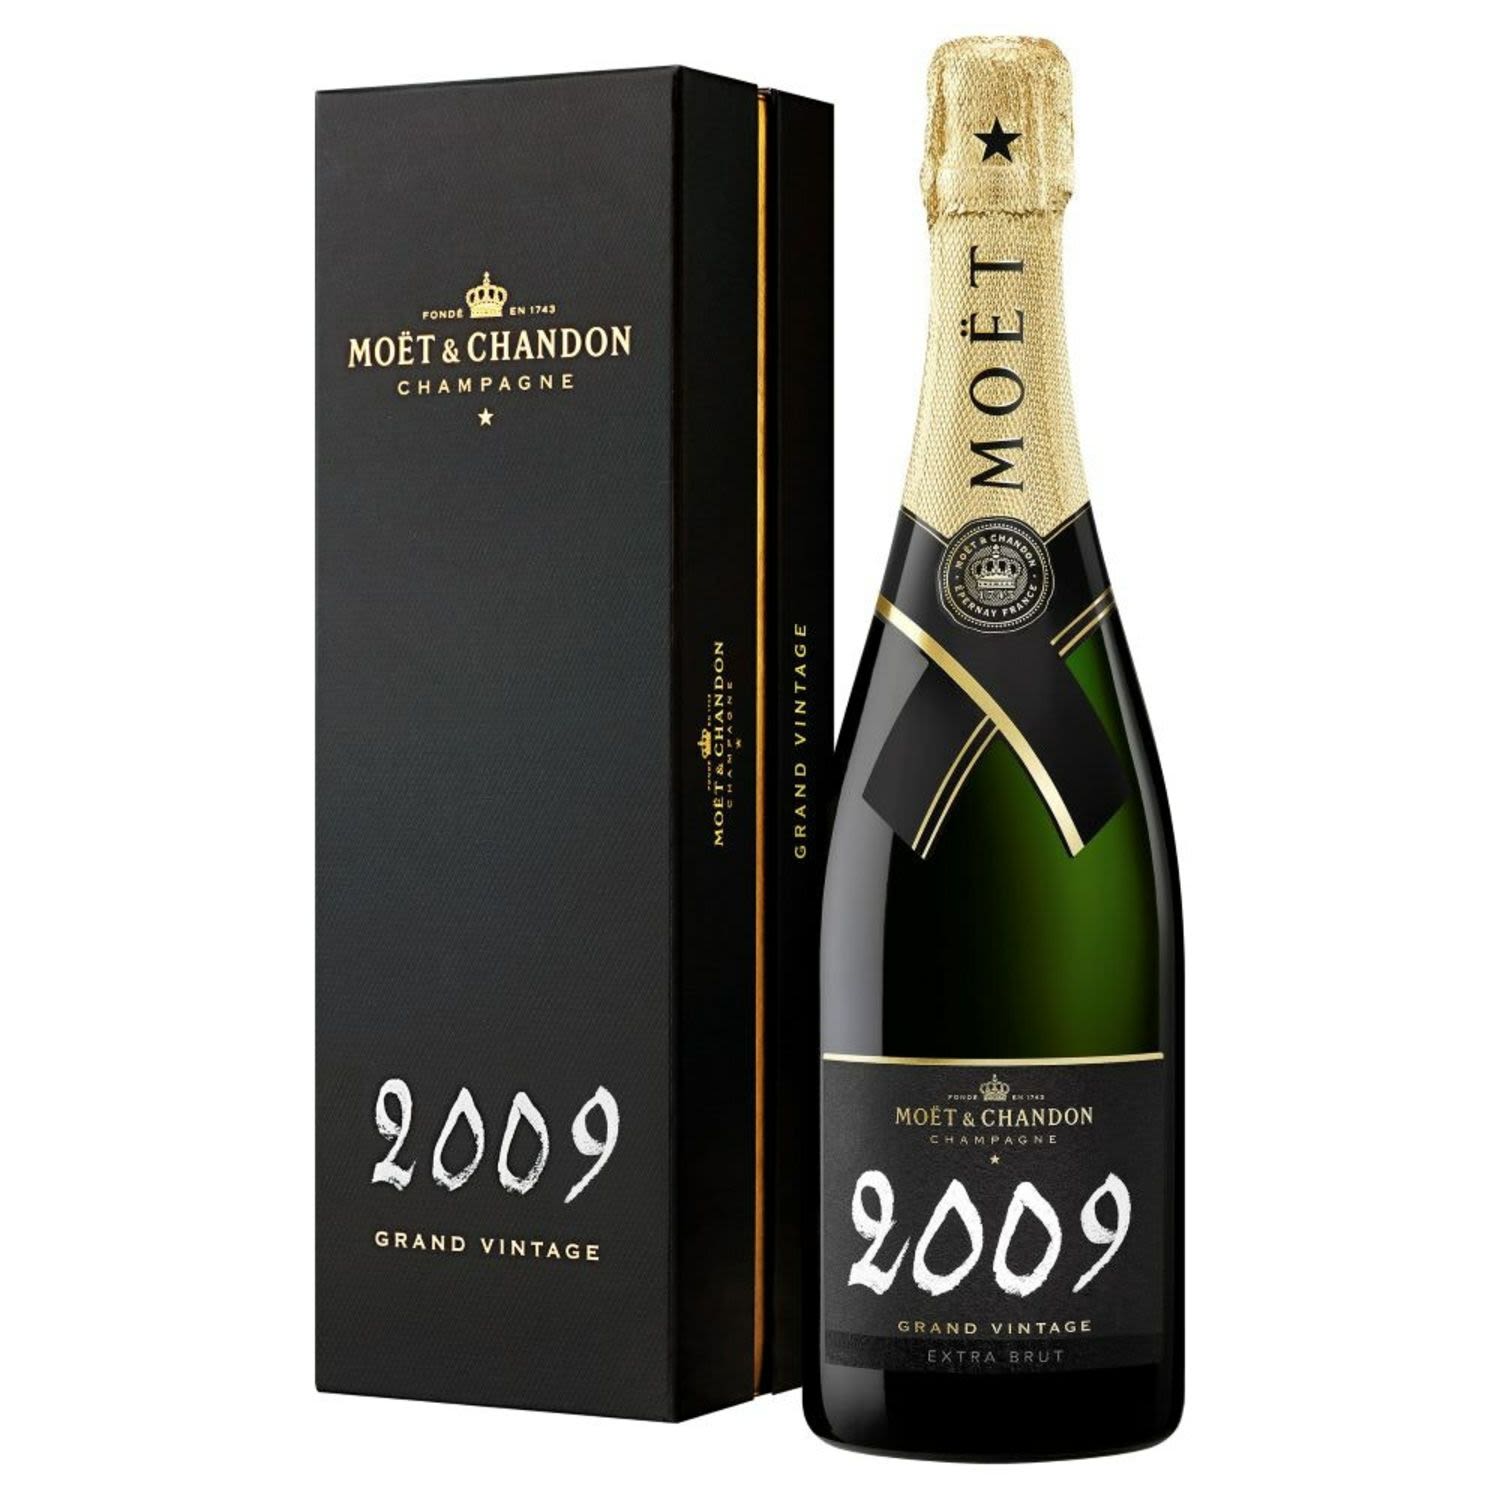 Moet & Chandon Grand Vintage Champagne 2009 Gift Box 750mL Bottle